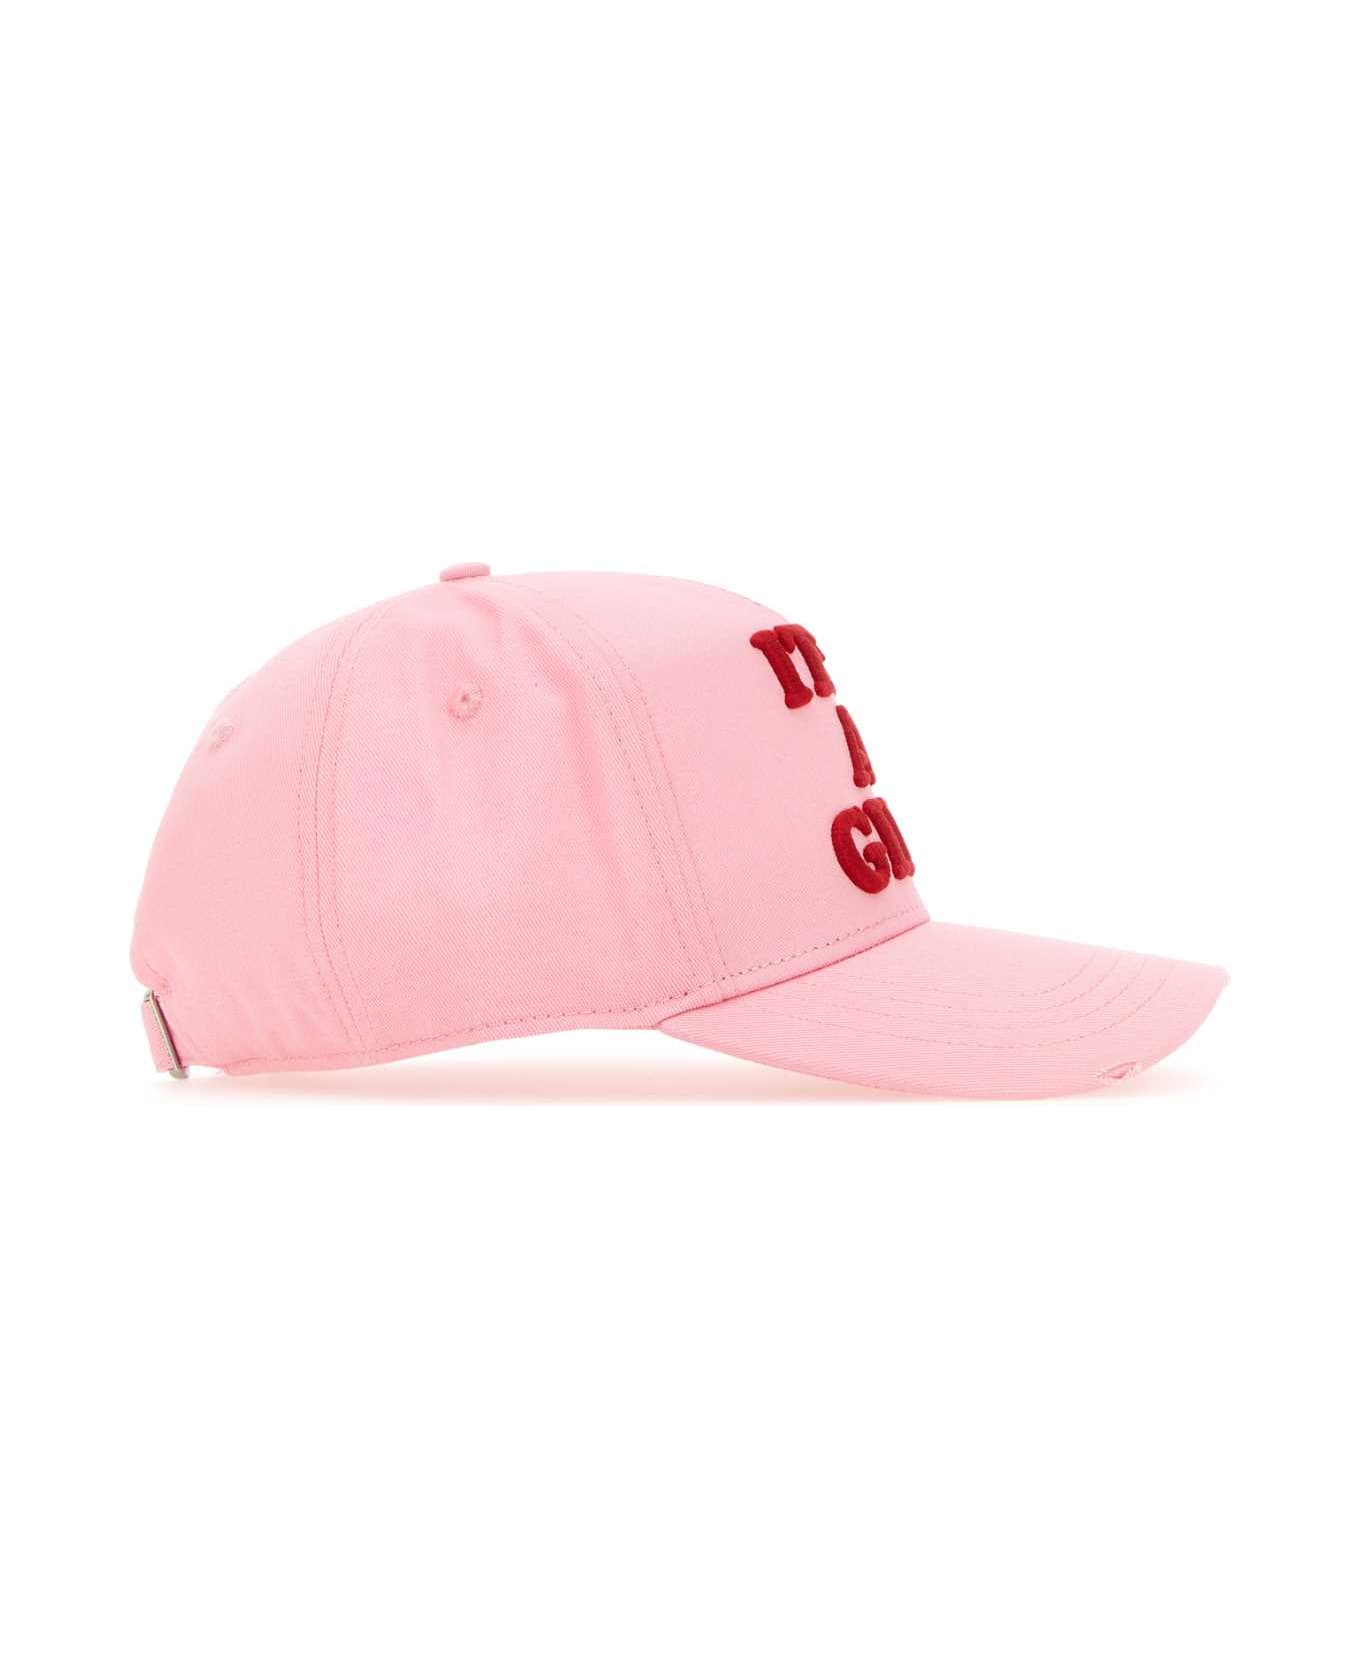 Dsquared2 Pink Cotton Baseball Cap - M1486